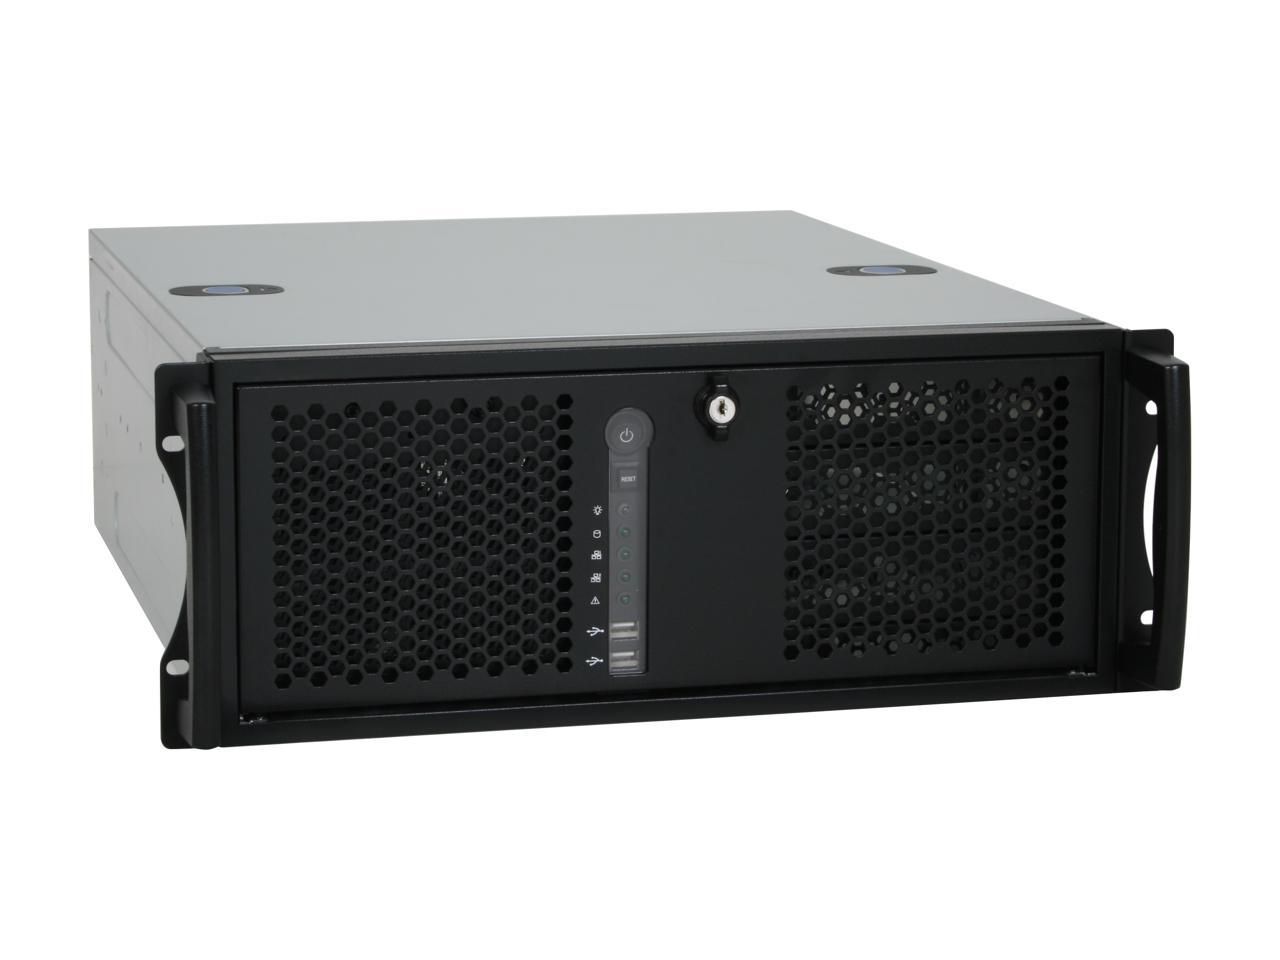 Chenbro Rm42200-1 1.2Mm Sgcc 4U Rackmount Feature-Advanced Industrial Server Chassis 3 External 5.25" Drive Bays